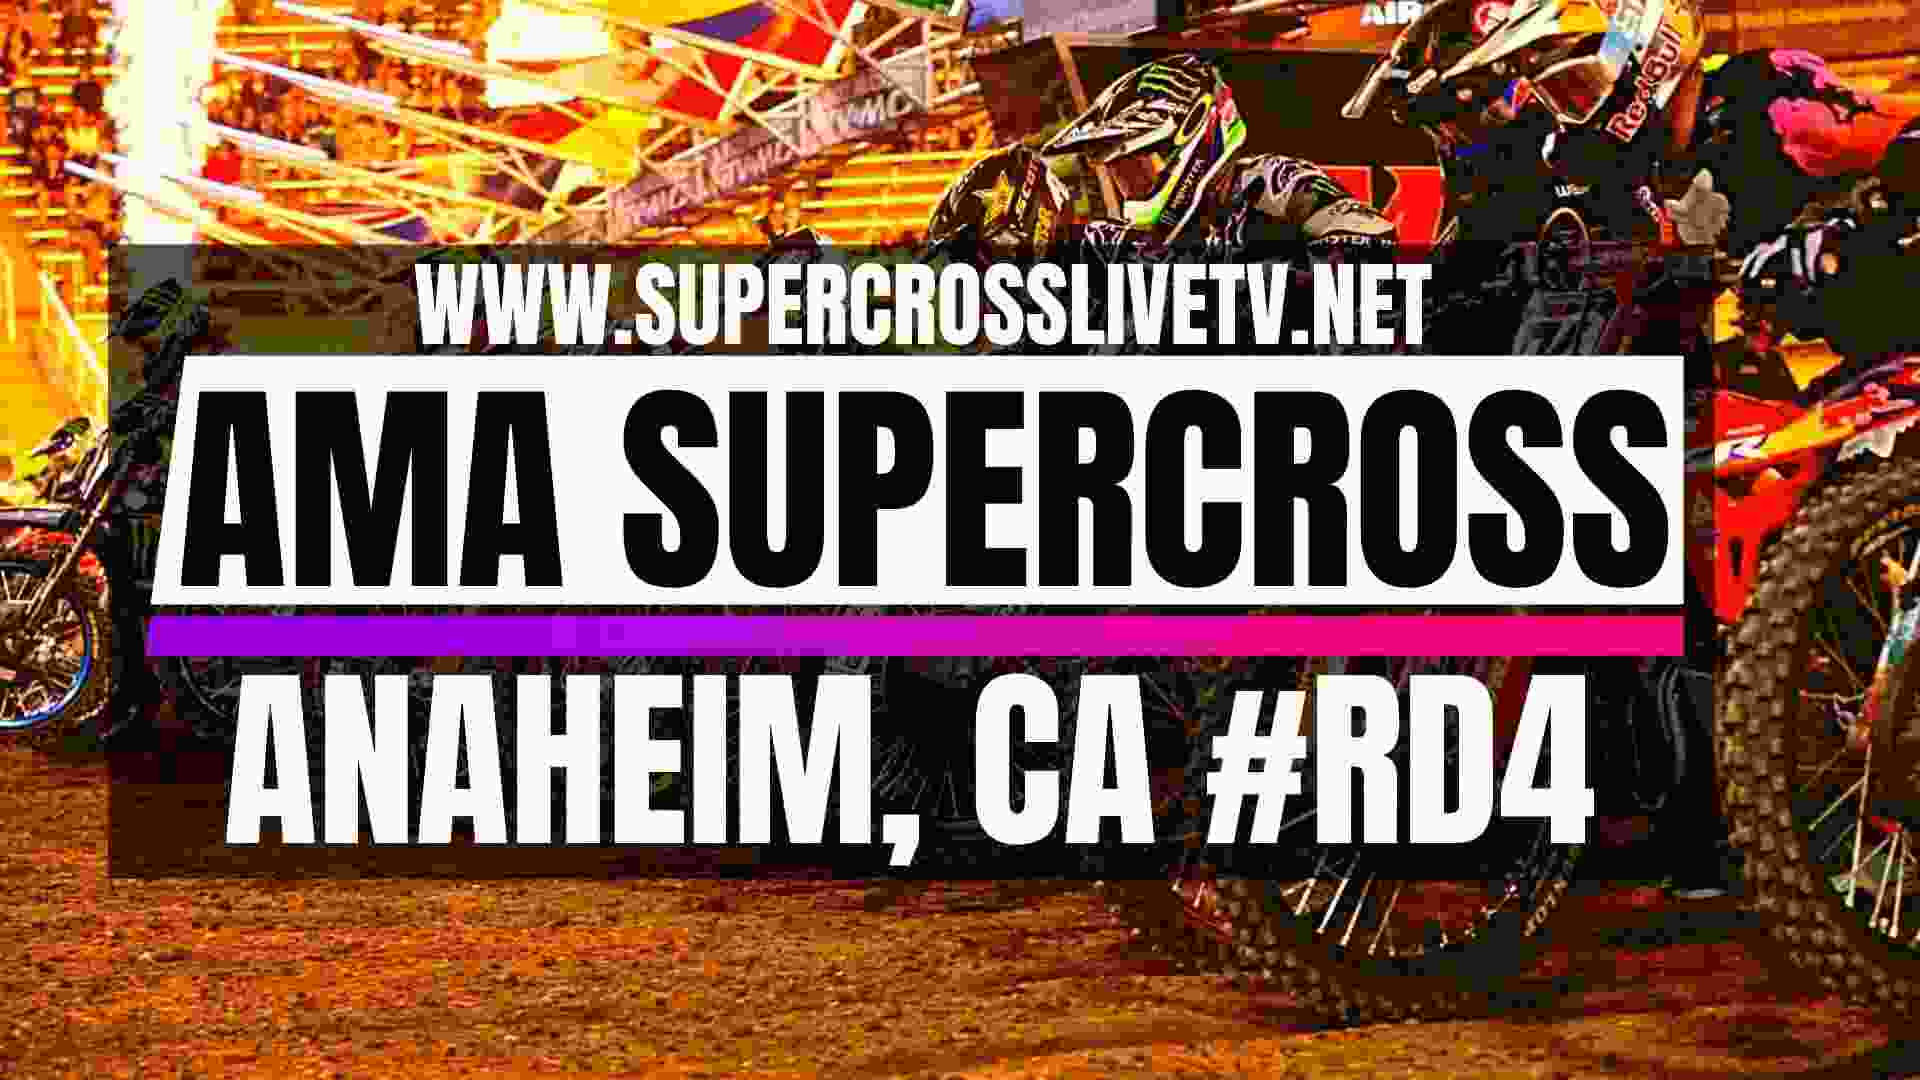 Anaheim 2 Supercross Live Stream Full Race Replay